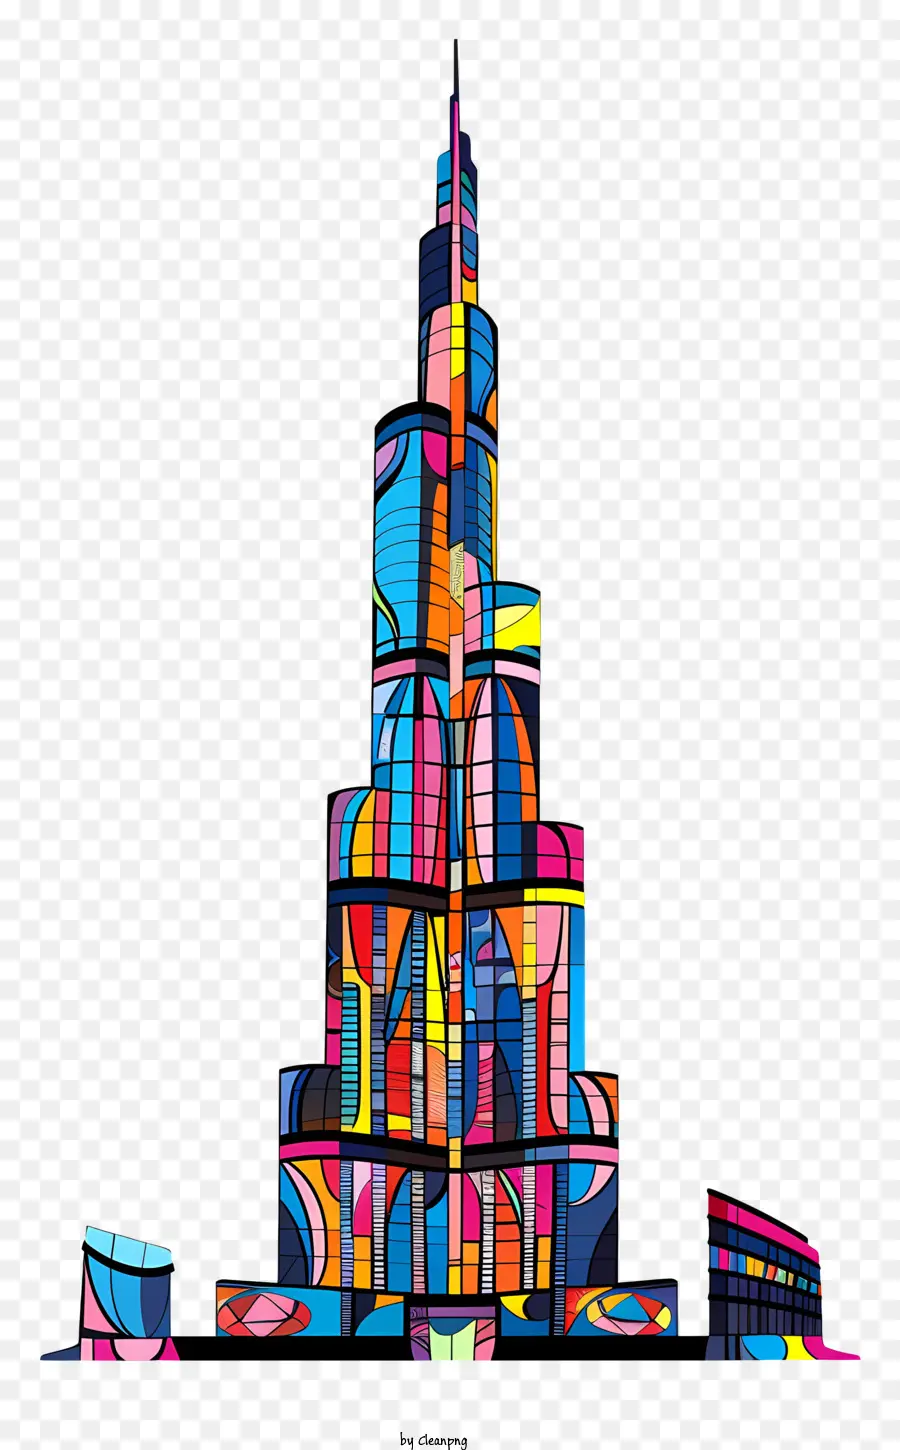 Burj Khalifa Burj Khalifa Skycopper - Illustrazione digitale dell'iconico Skyscraper Burj Khalifa